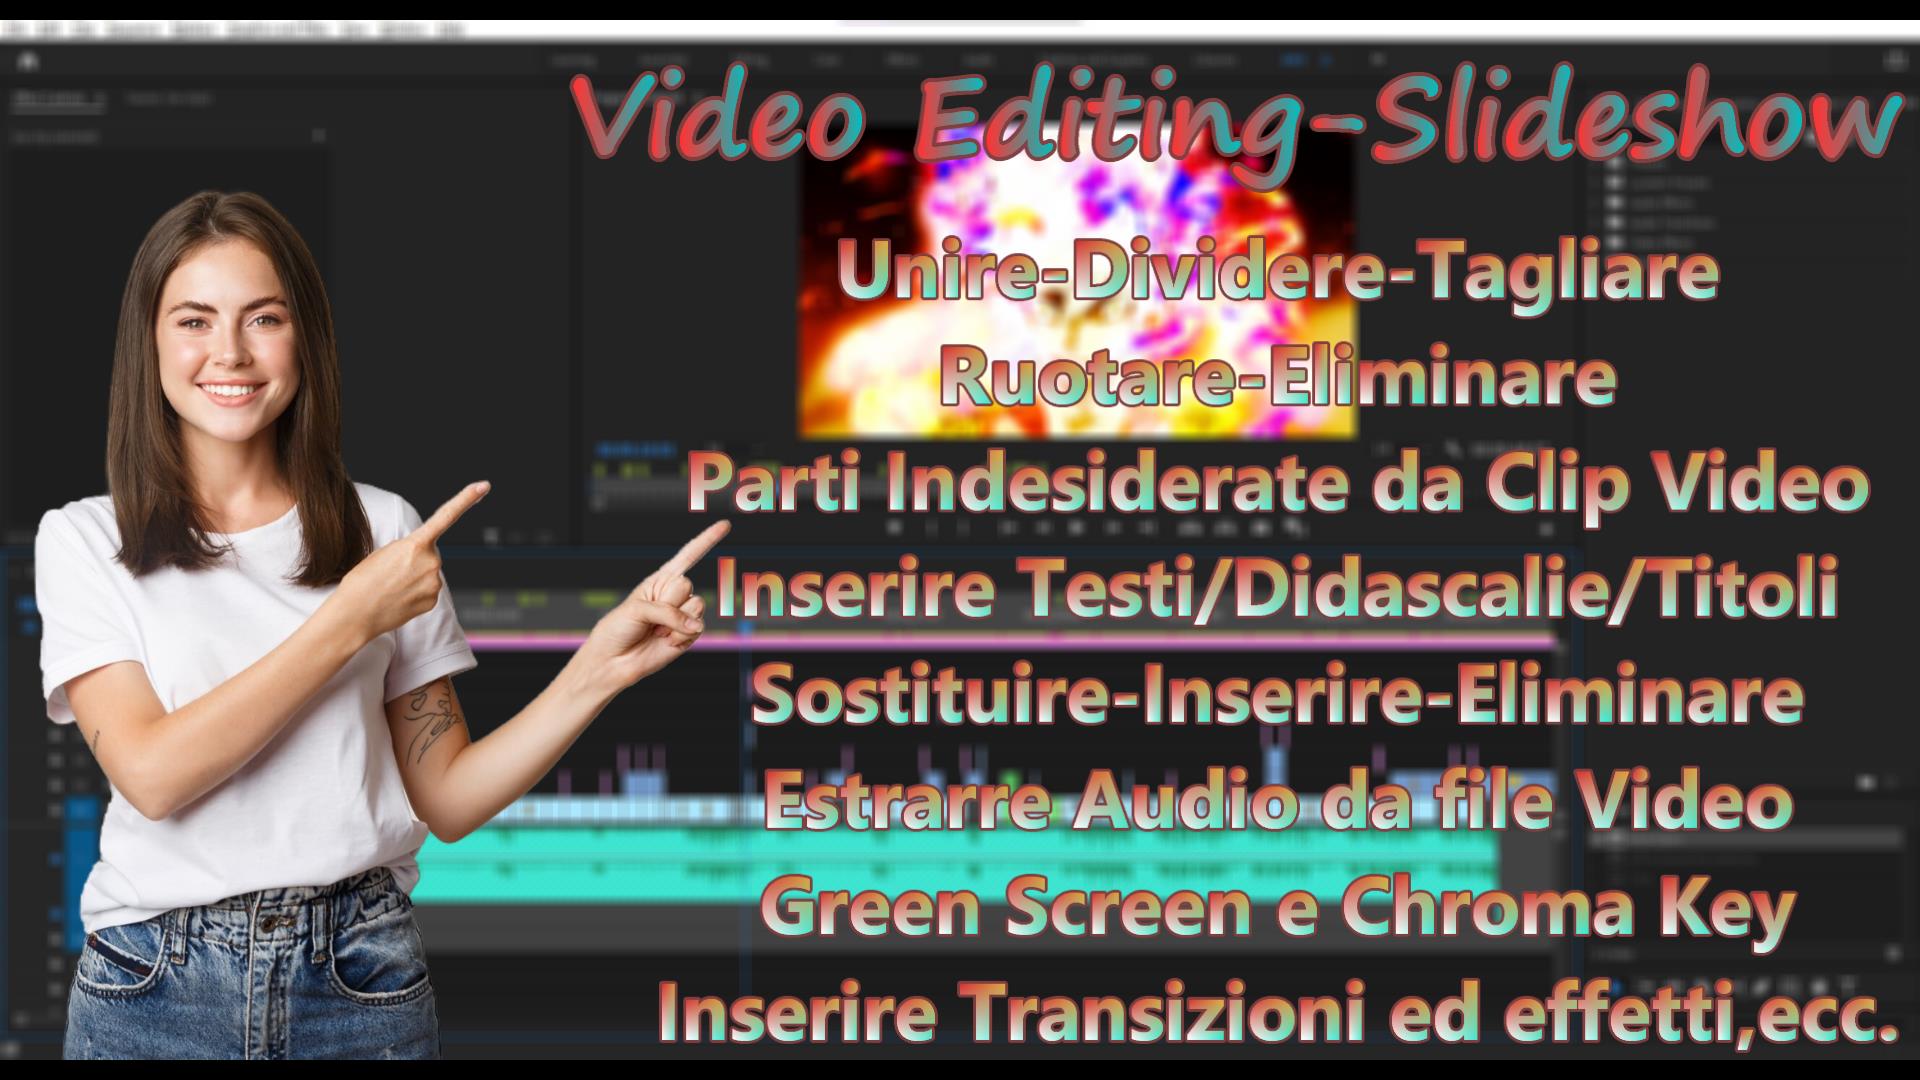 Video Editing e Slideshow